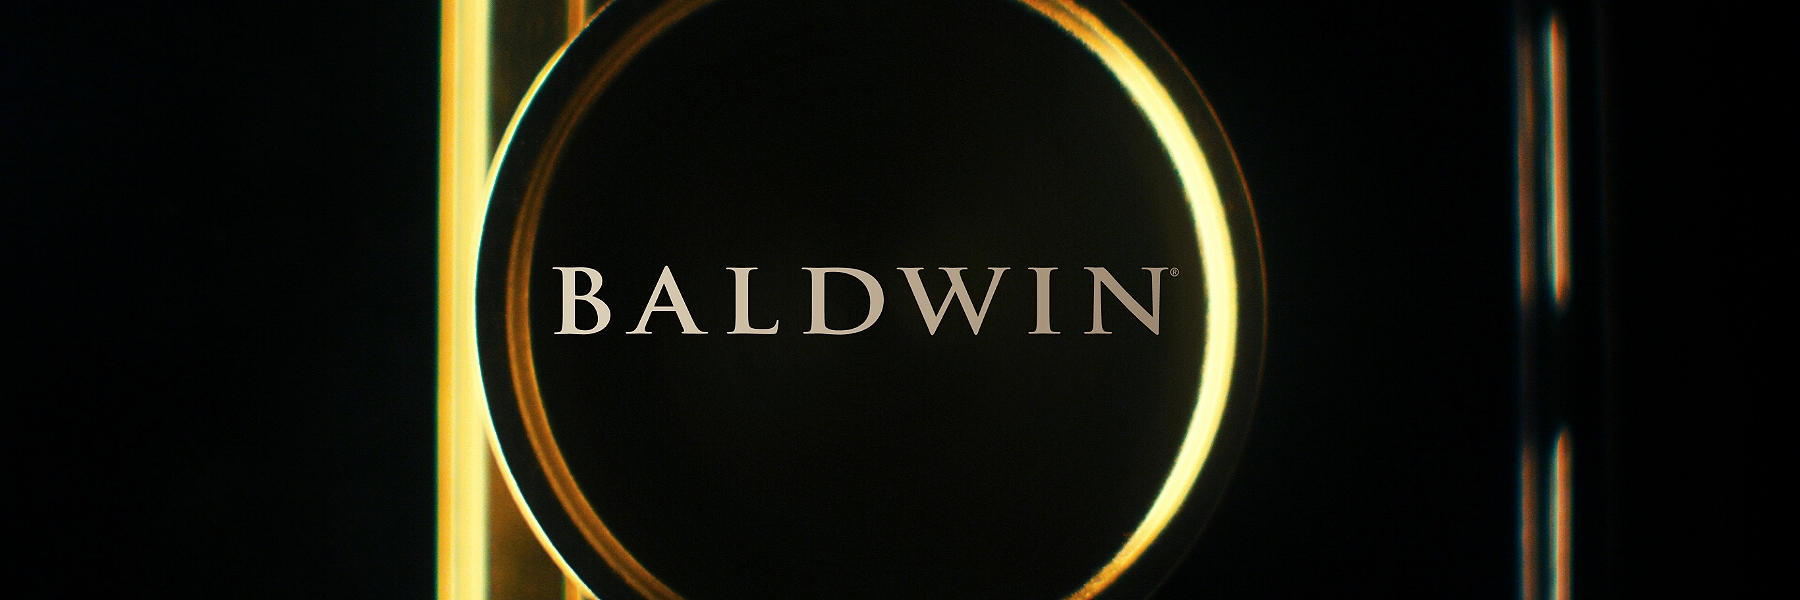 Baldwin logo in a background